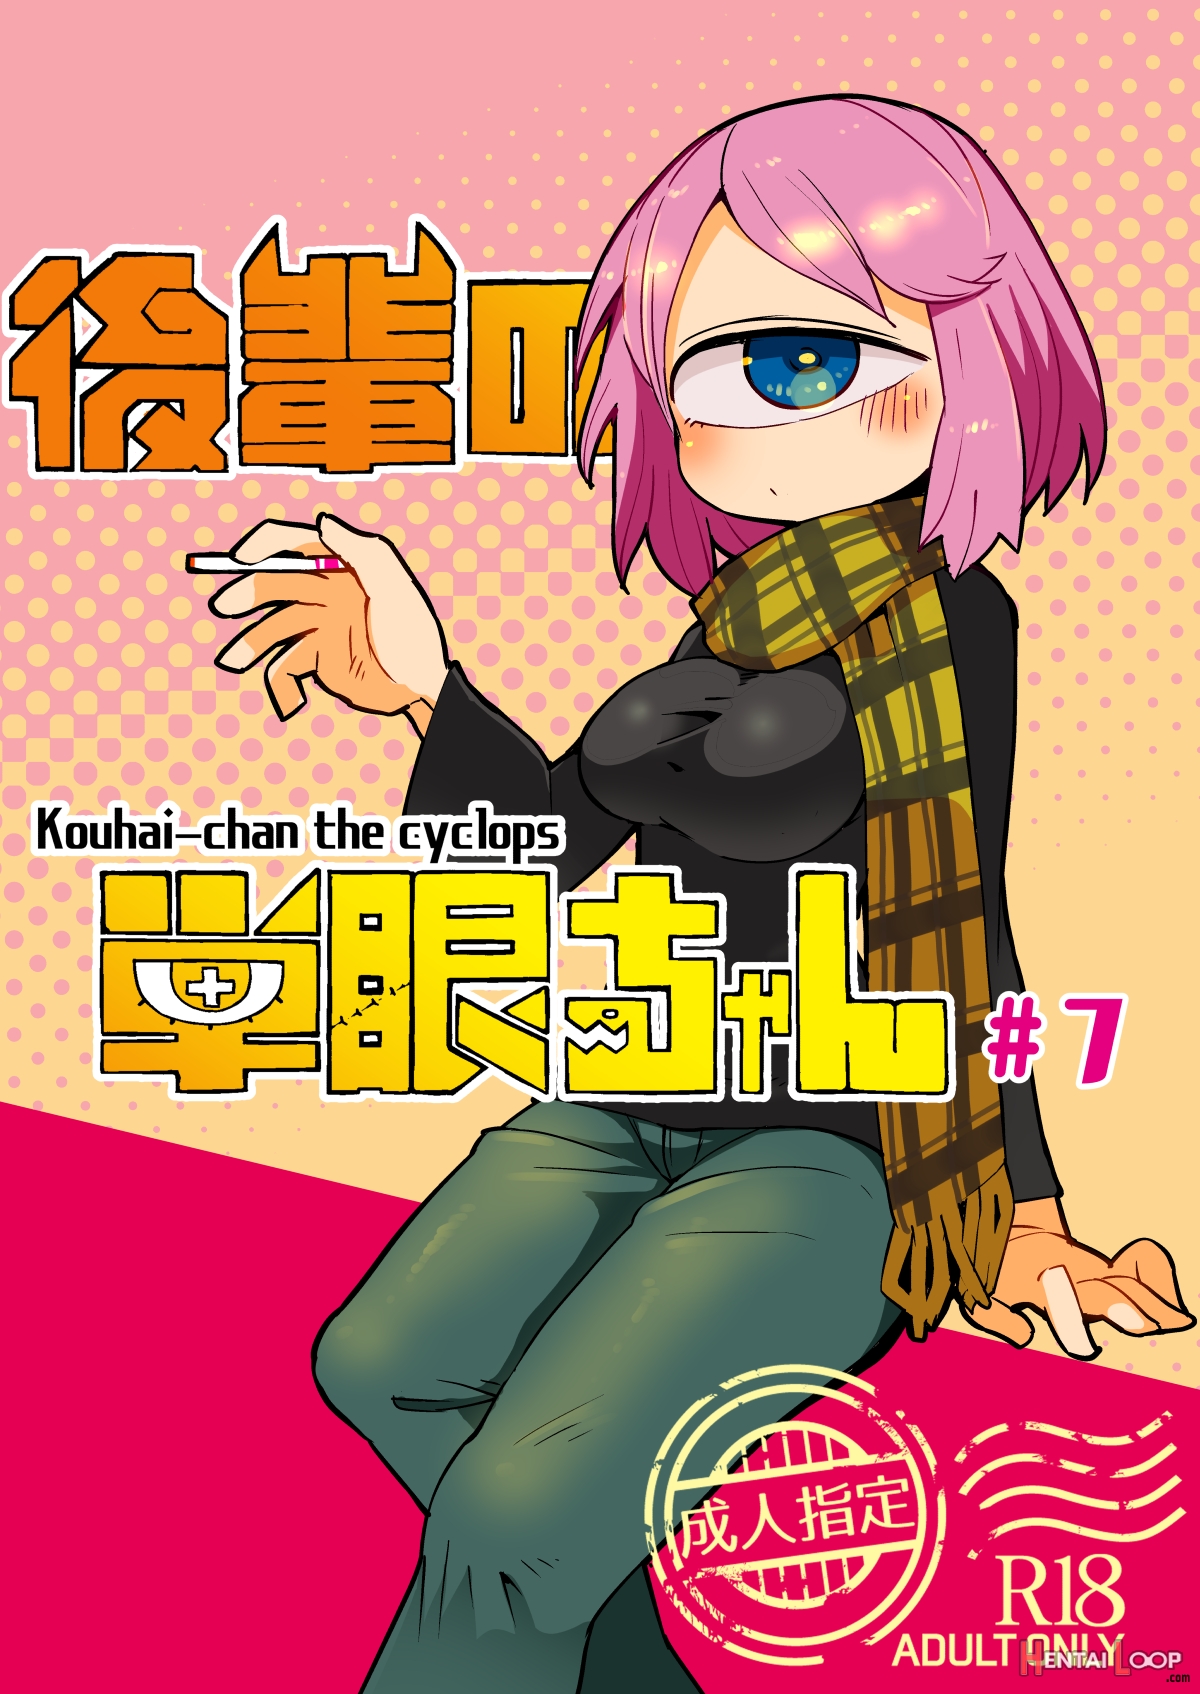 Kouhai-chan The Cyclops #7 page 1